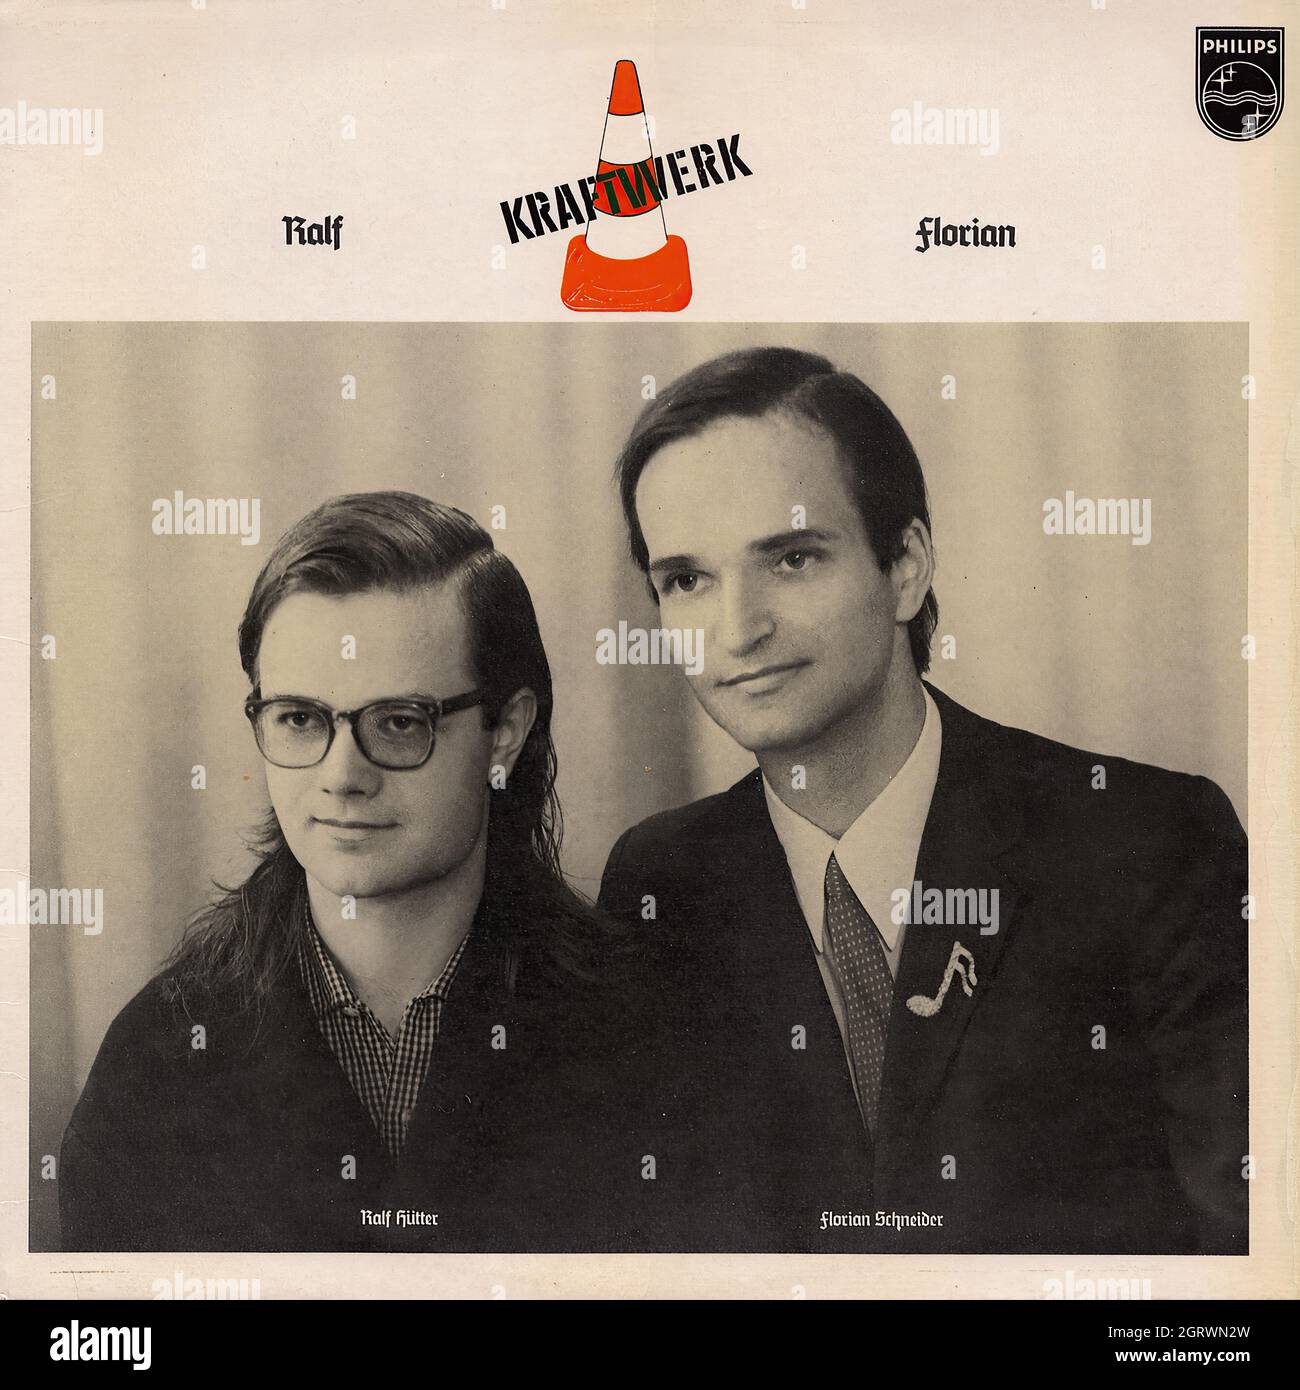 Kraftwerk - Ralf & Florian - Vintage Vinyl Record Cover Stock Photo